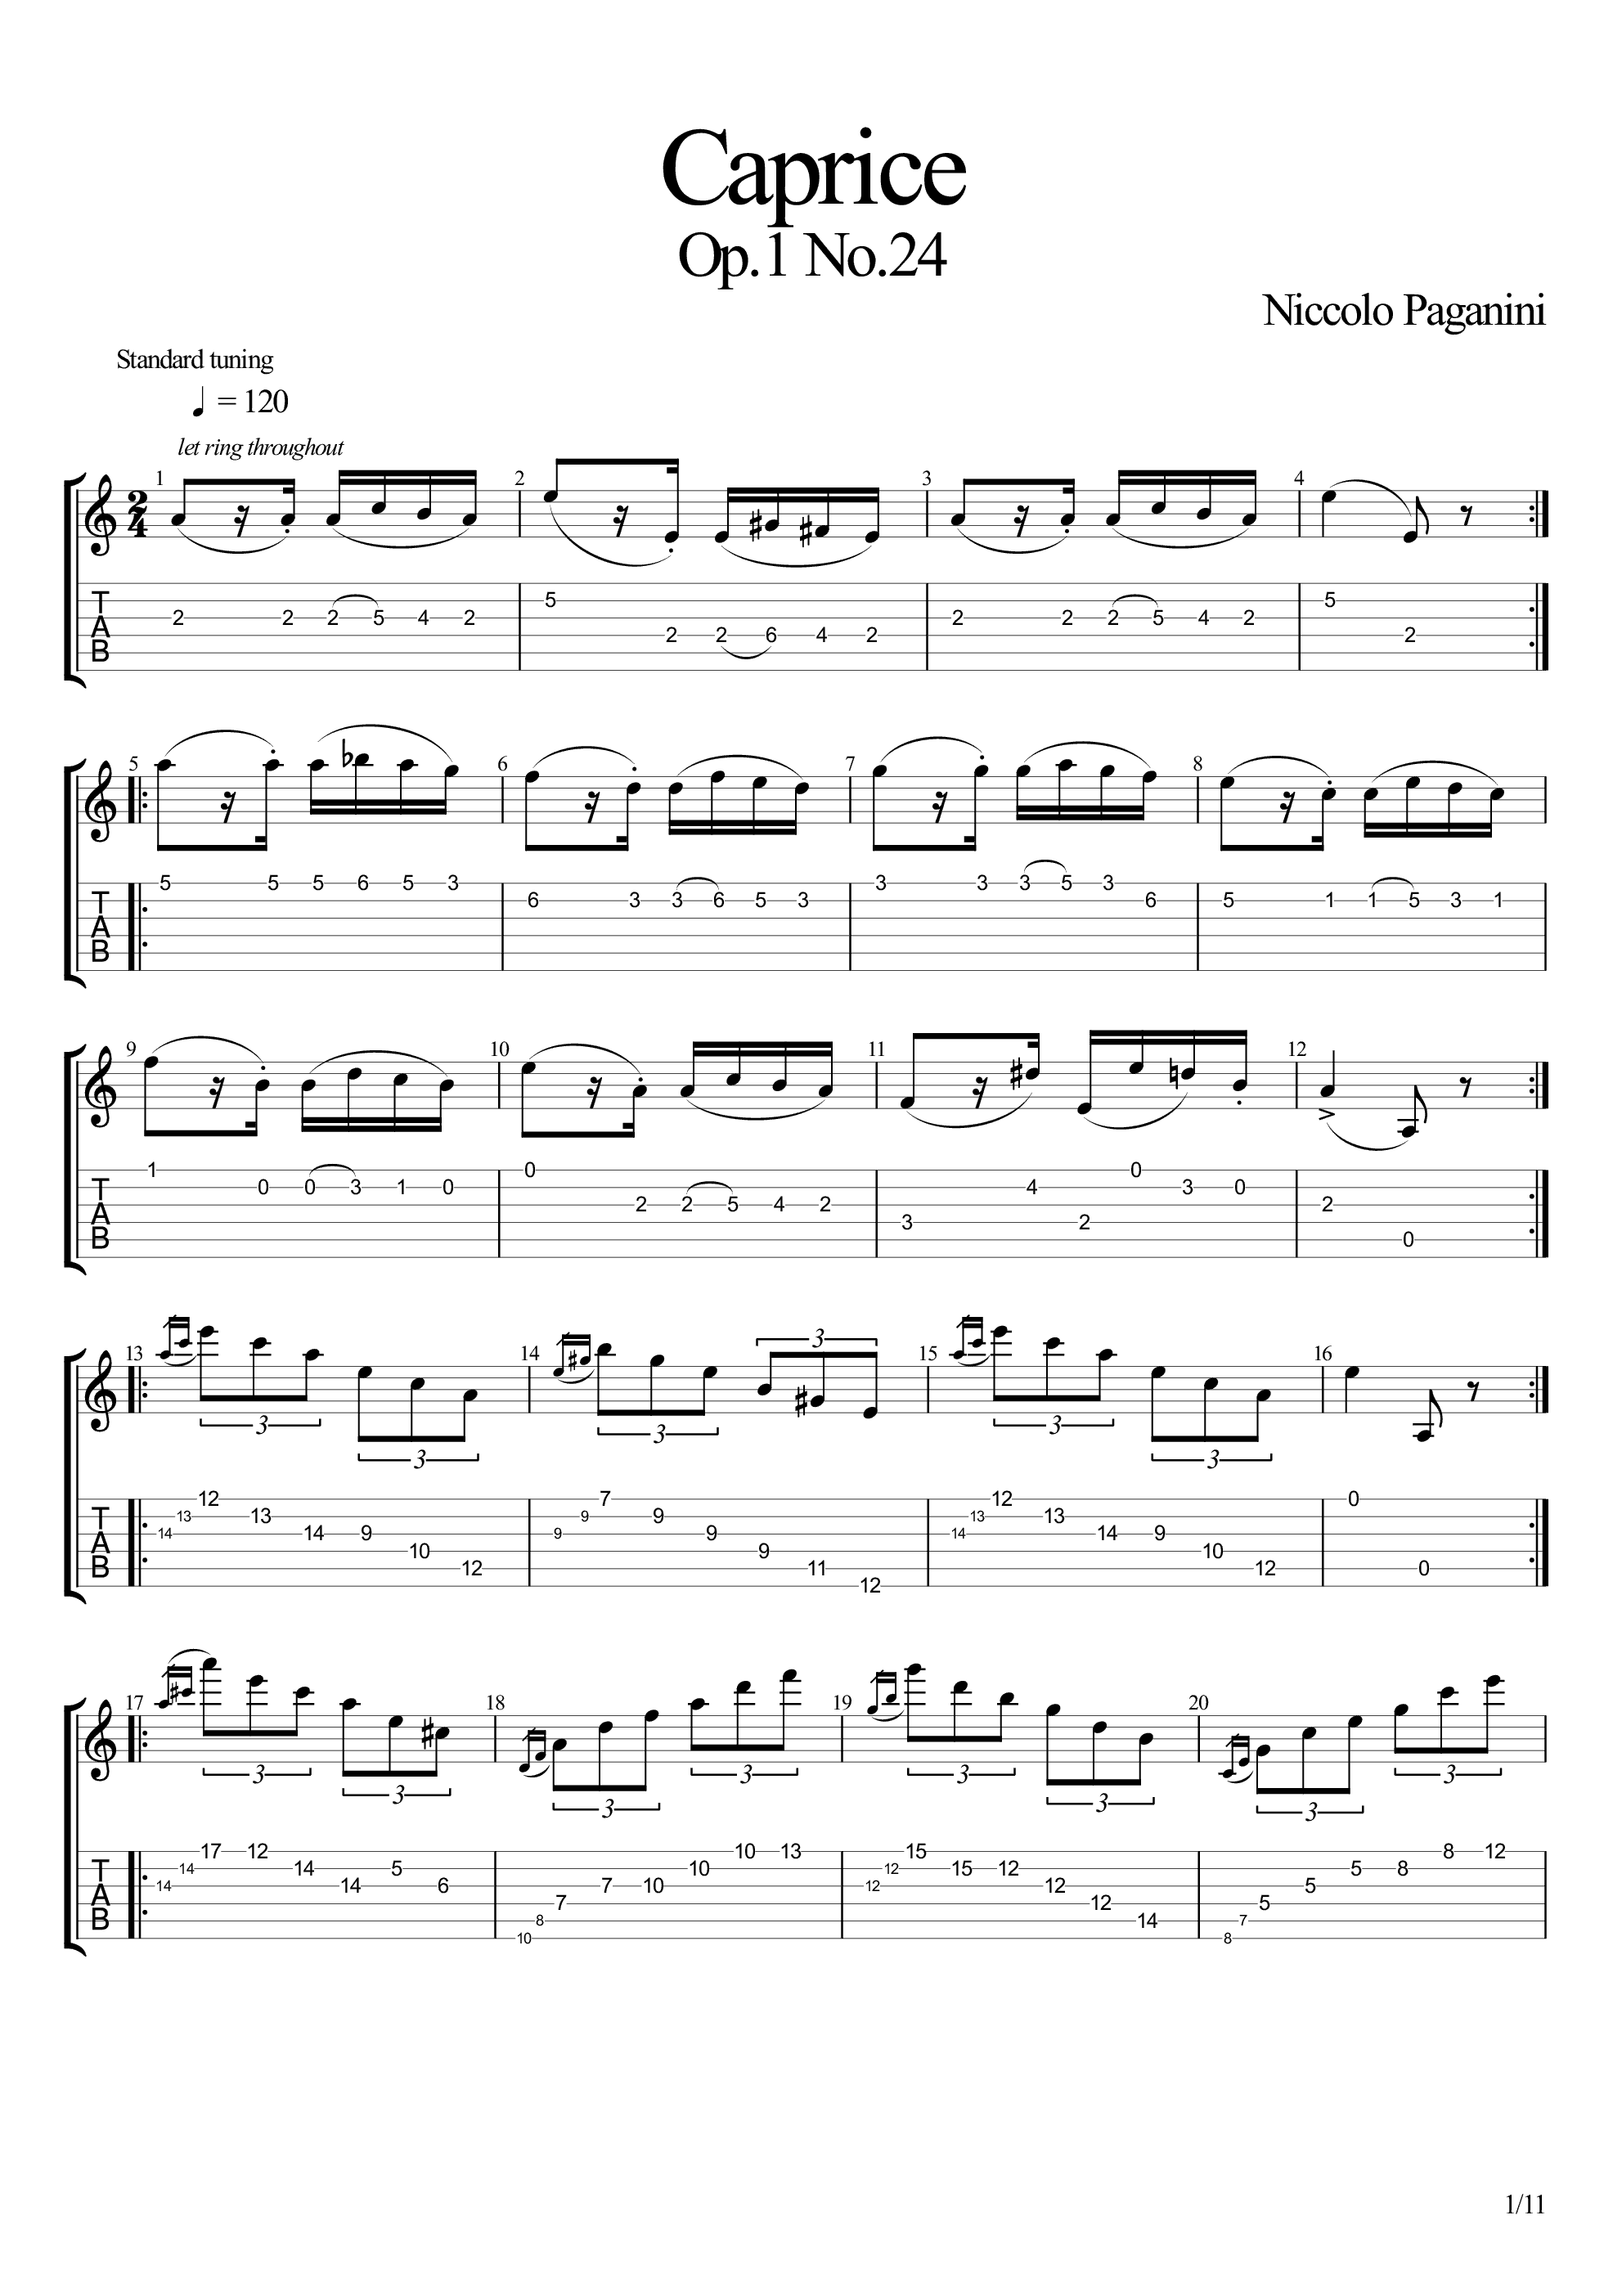 Fifth Caprice吉他谱(gtp谱)_帕格尼尼(Niccolò Paganini)